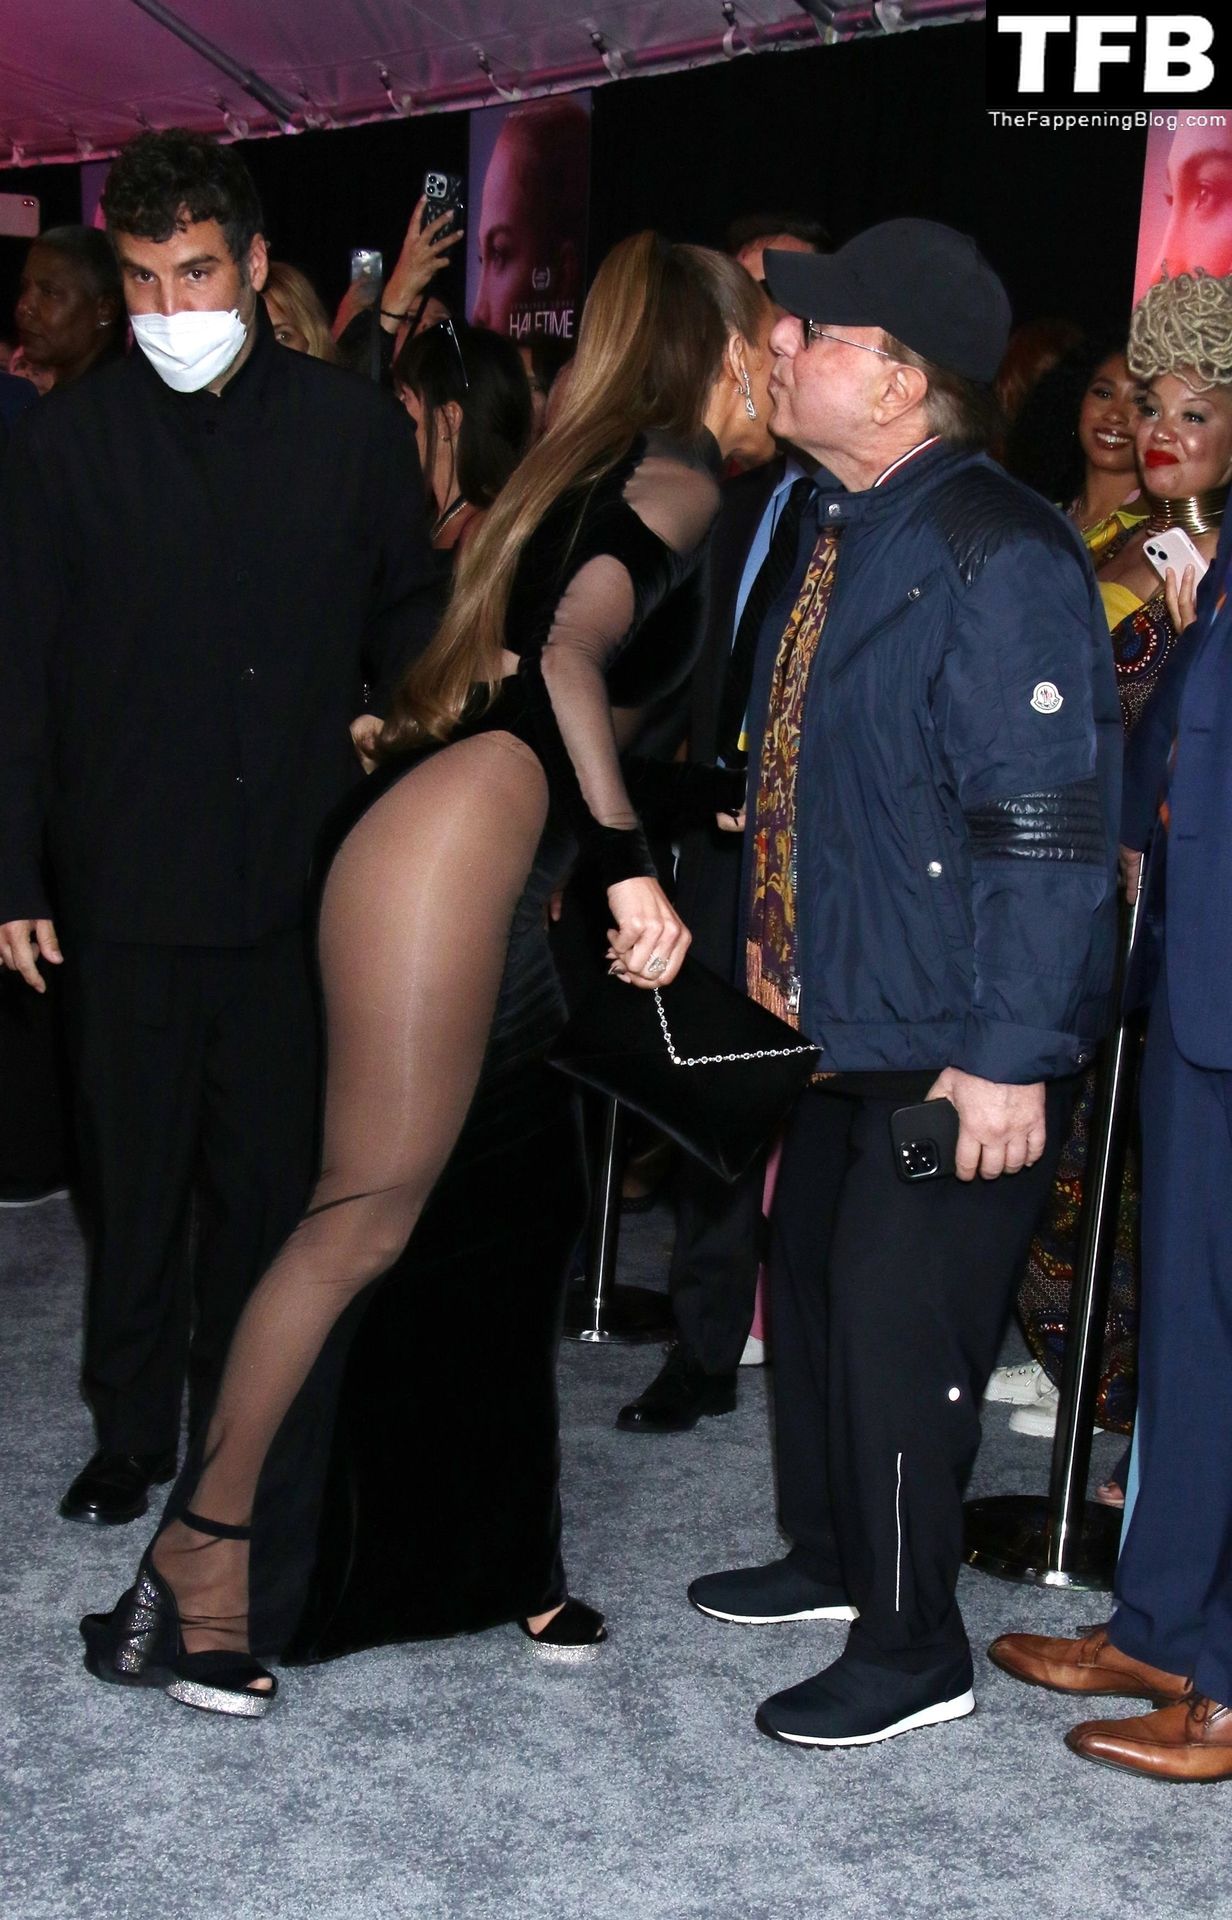 Jennifer-Lopez-Sexy-The-Fappening-Blog-25-1.jpg